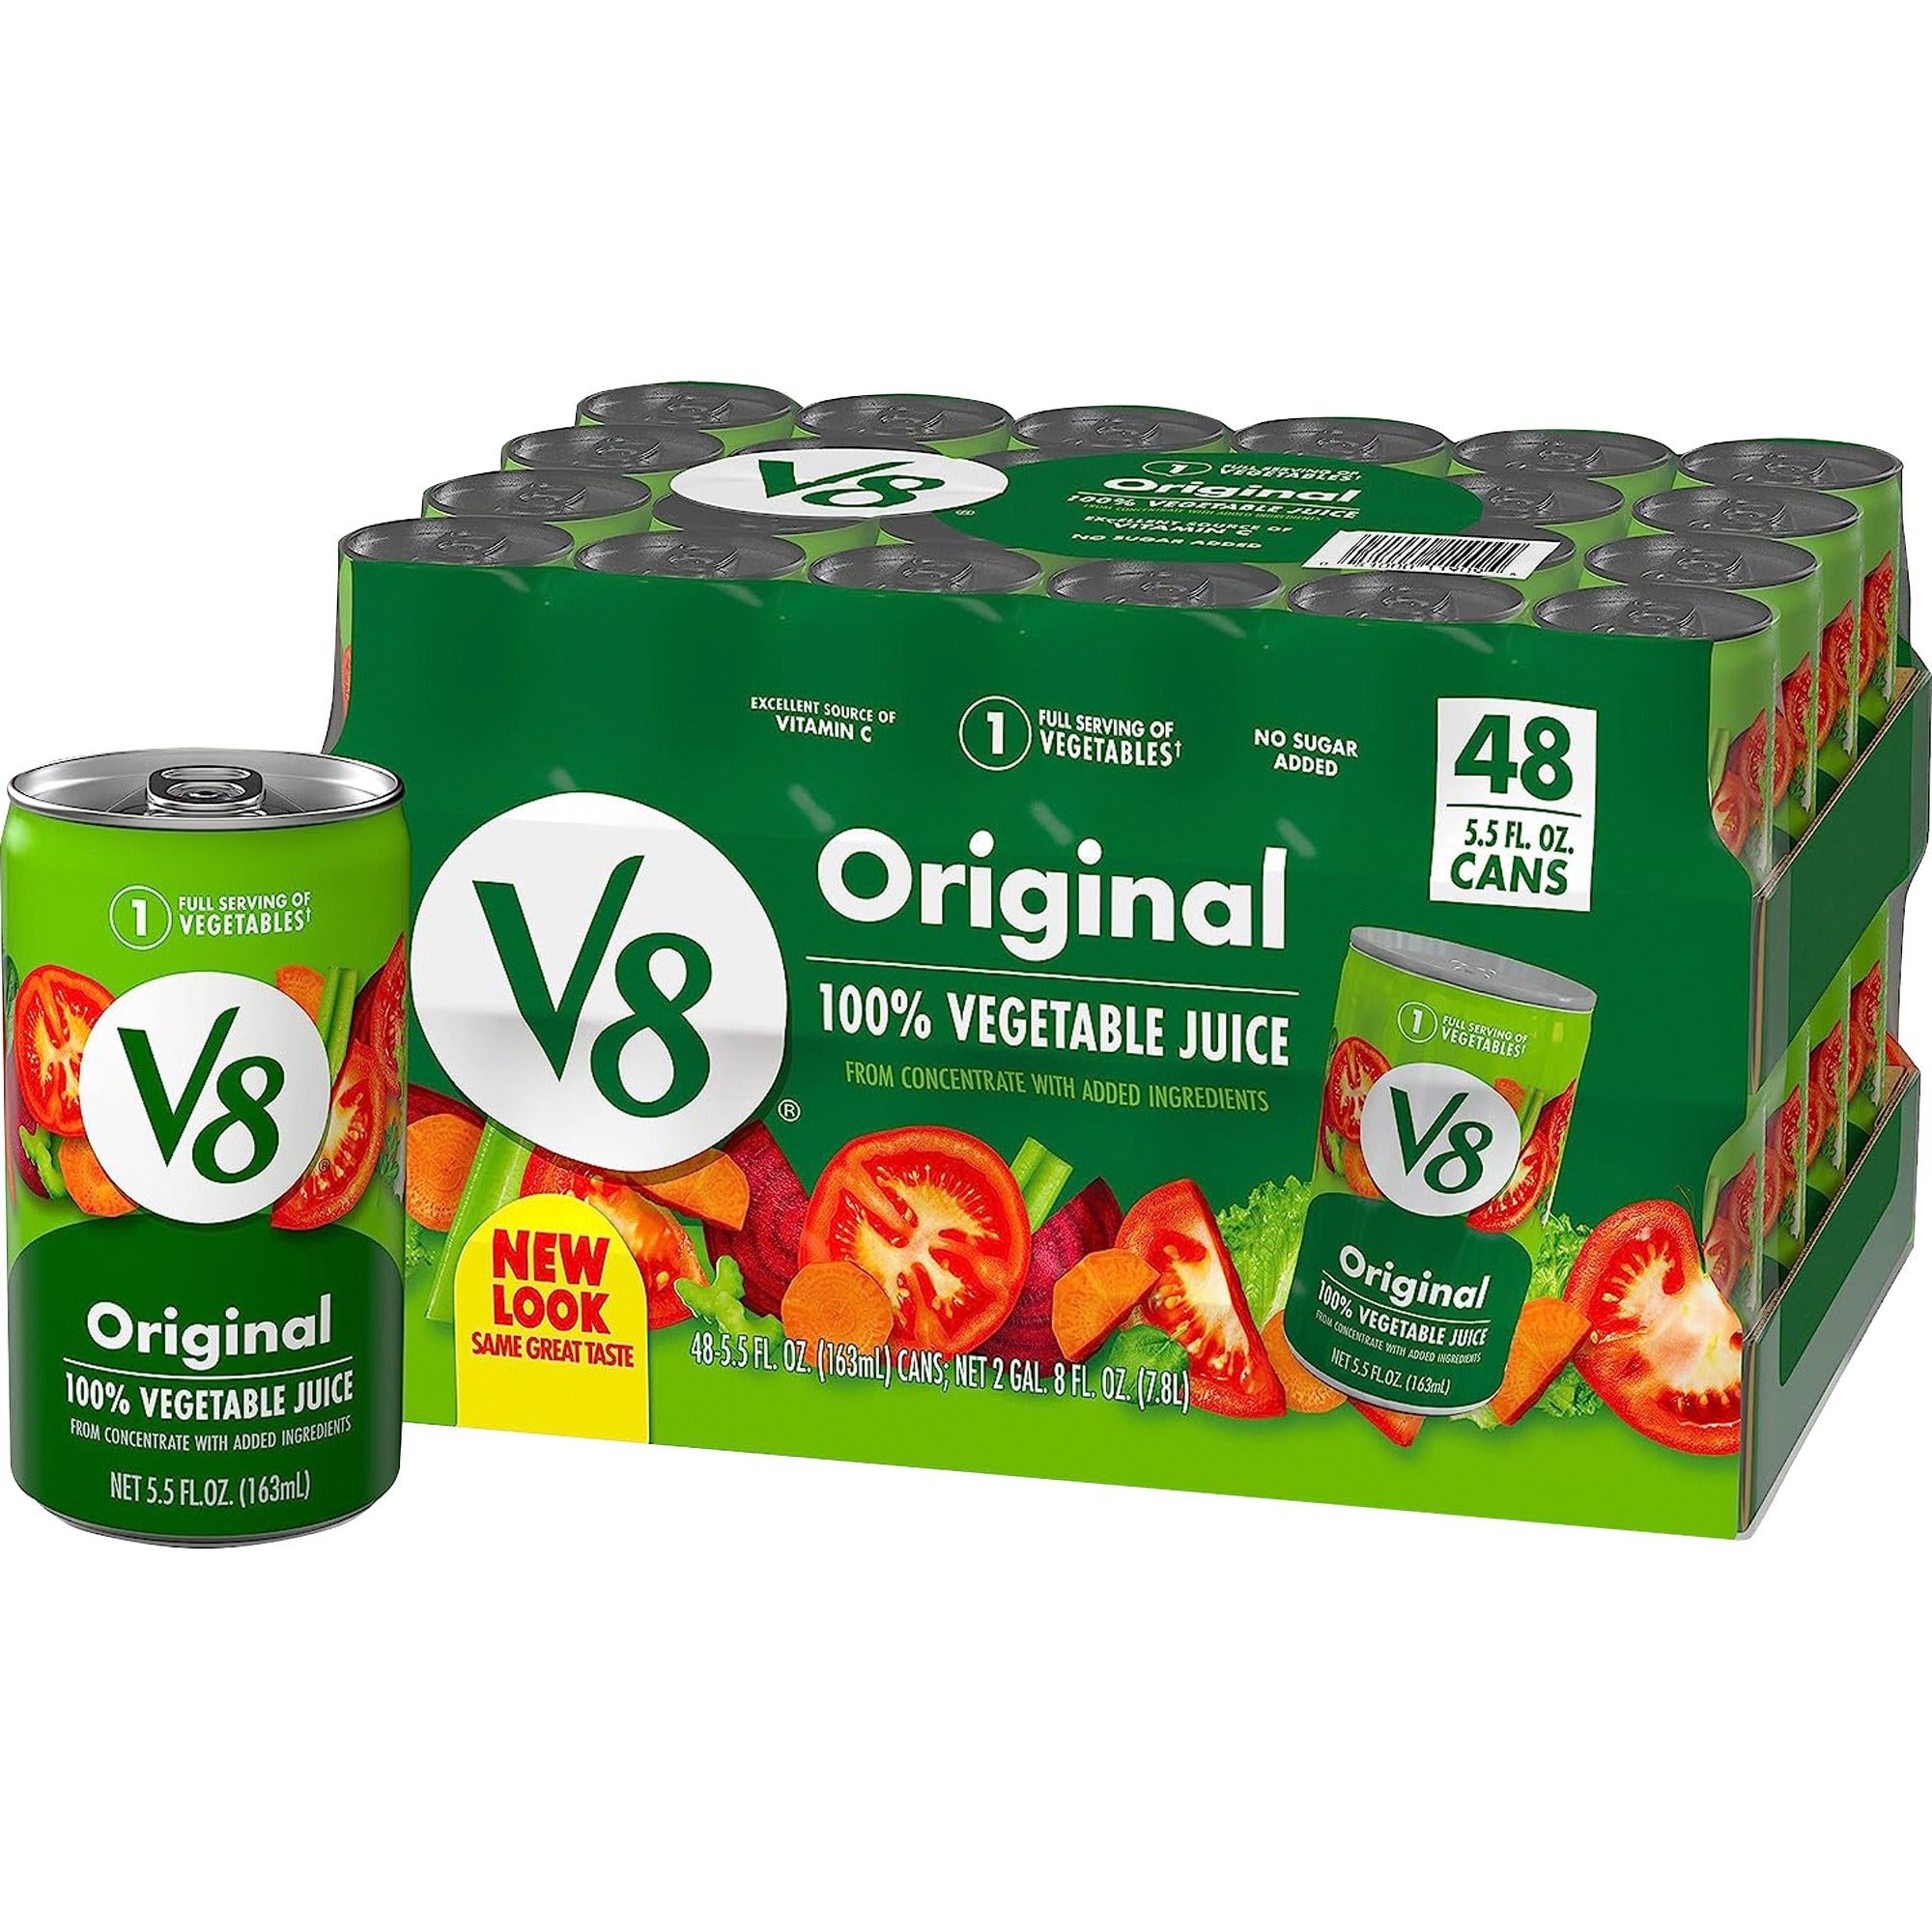 v8-original-vegetable-juice-ready-to-drink-550-fl-oz-163-ml-can-48-carton_cam0882 - 1